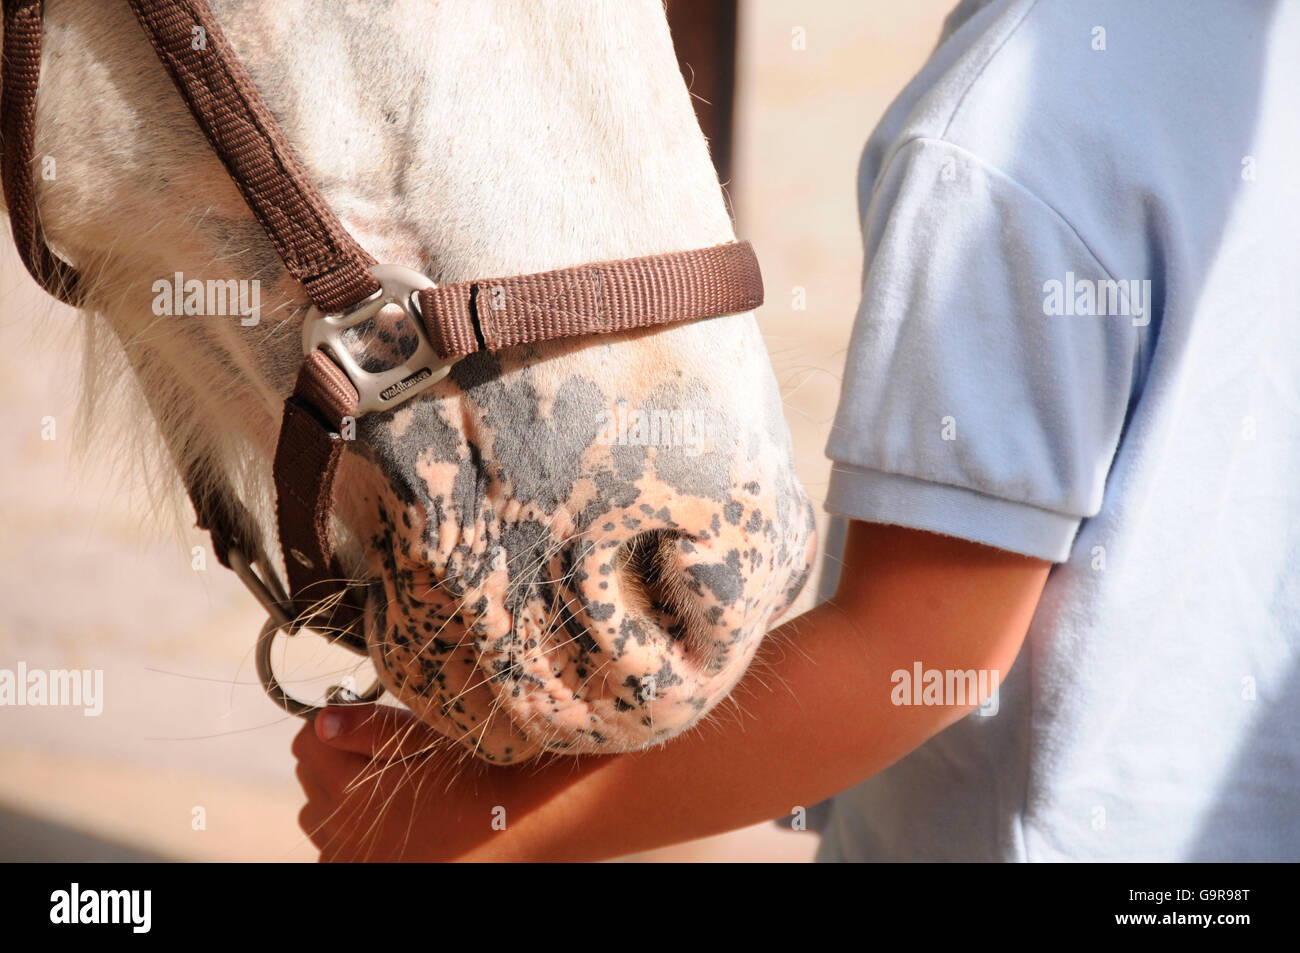 Child with Horse / mottled skin Stock Photo